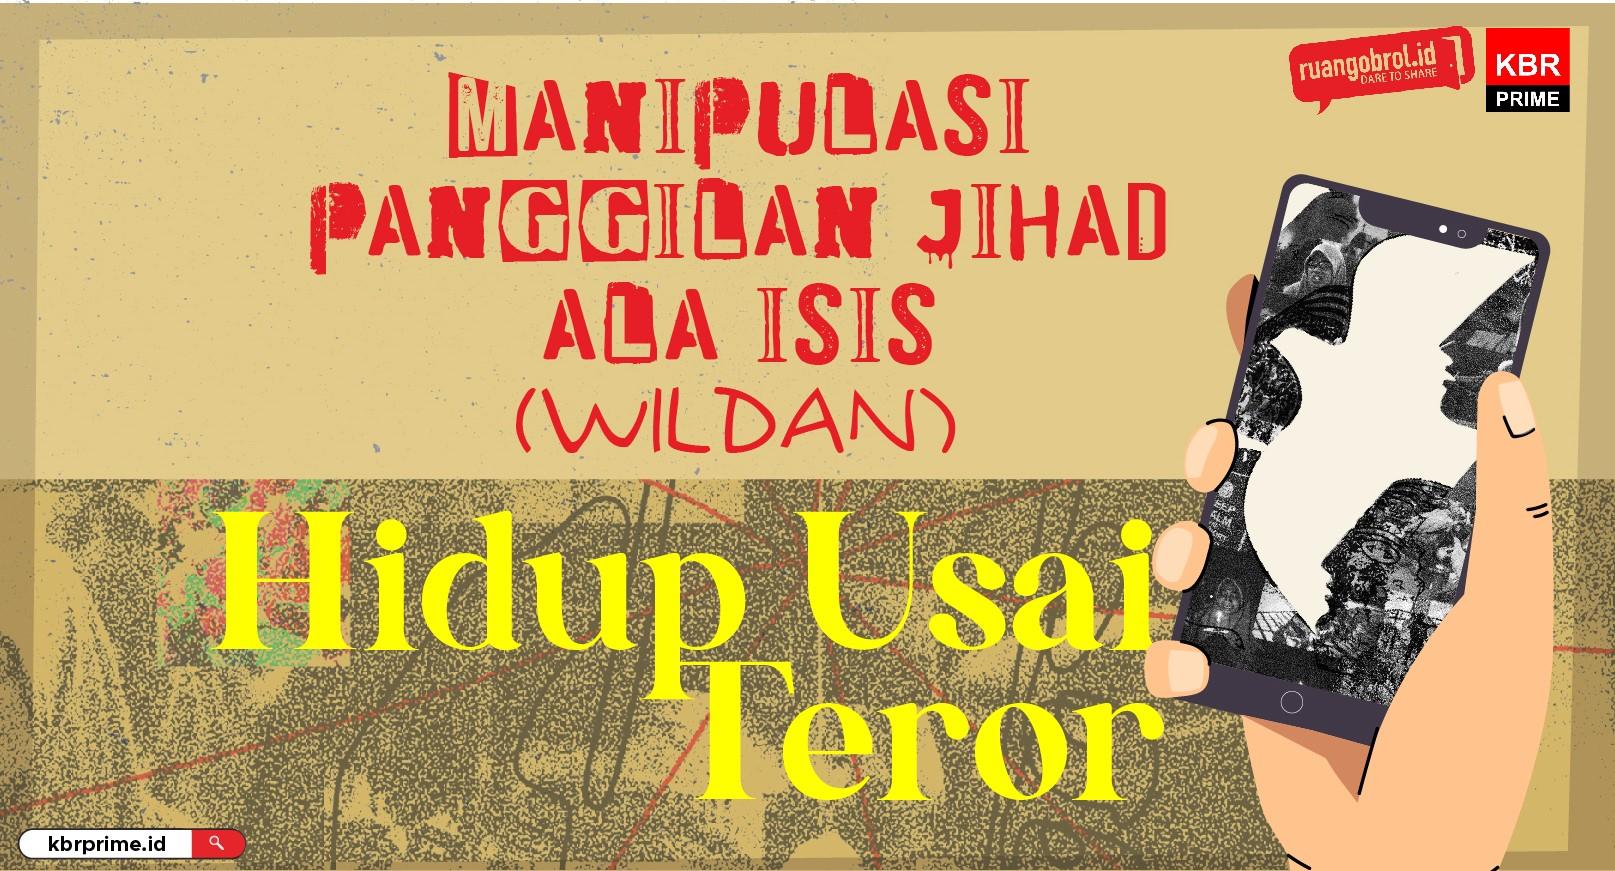 HIDUP USAI TEROR Season 2 : Manipulasi Panggilan Jihad a la ISIS (Part 1)